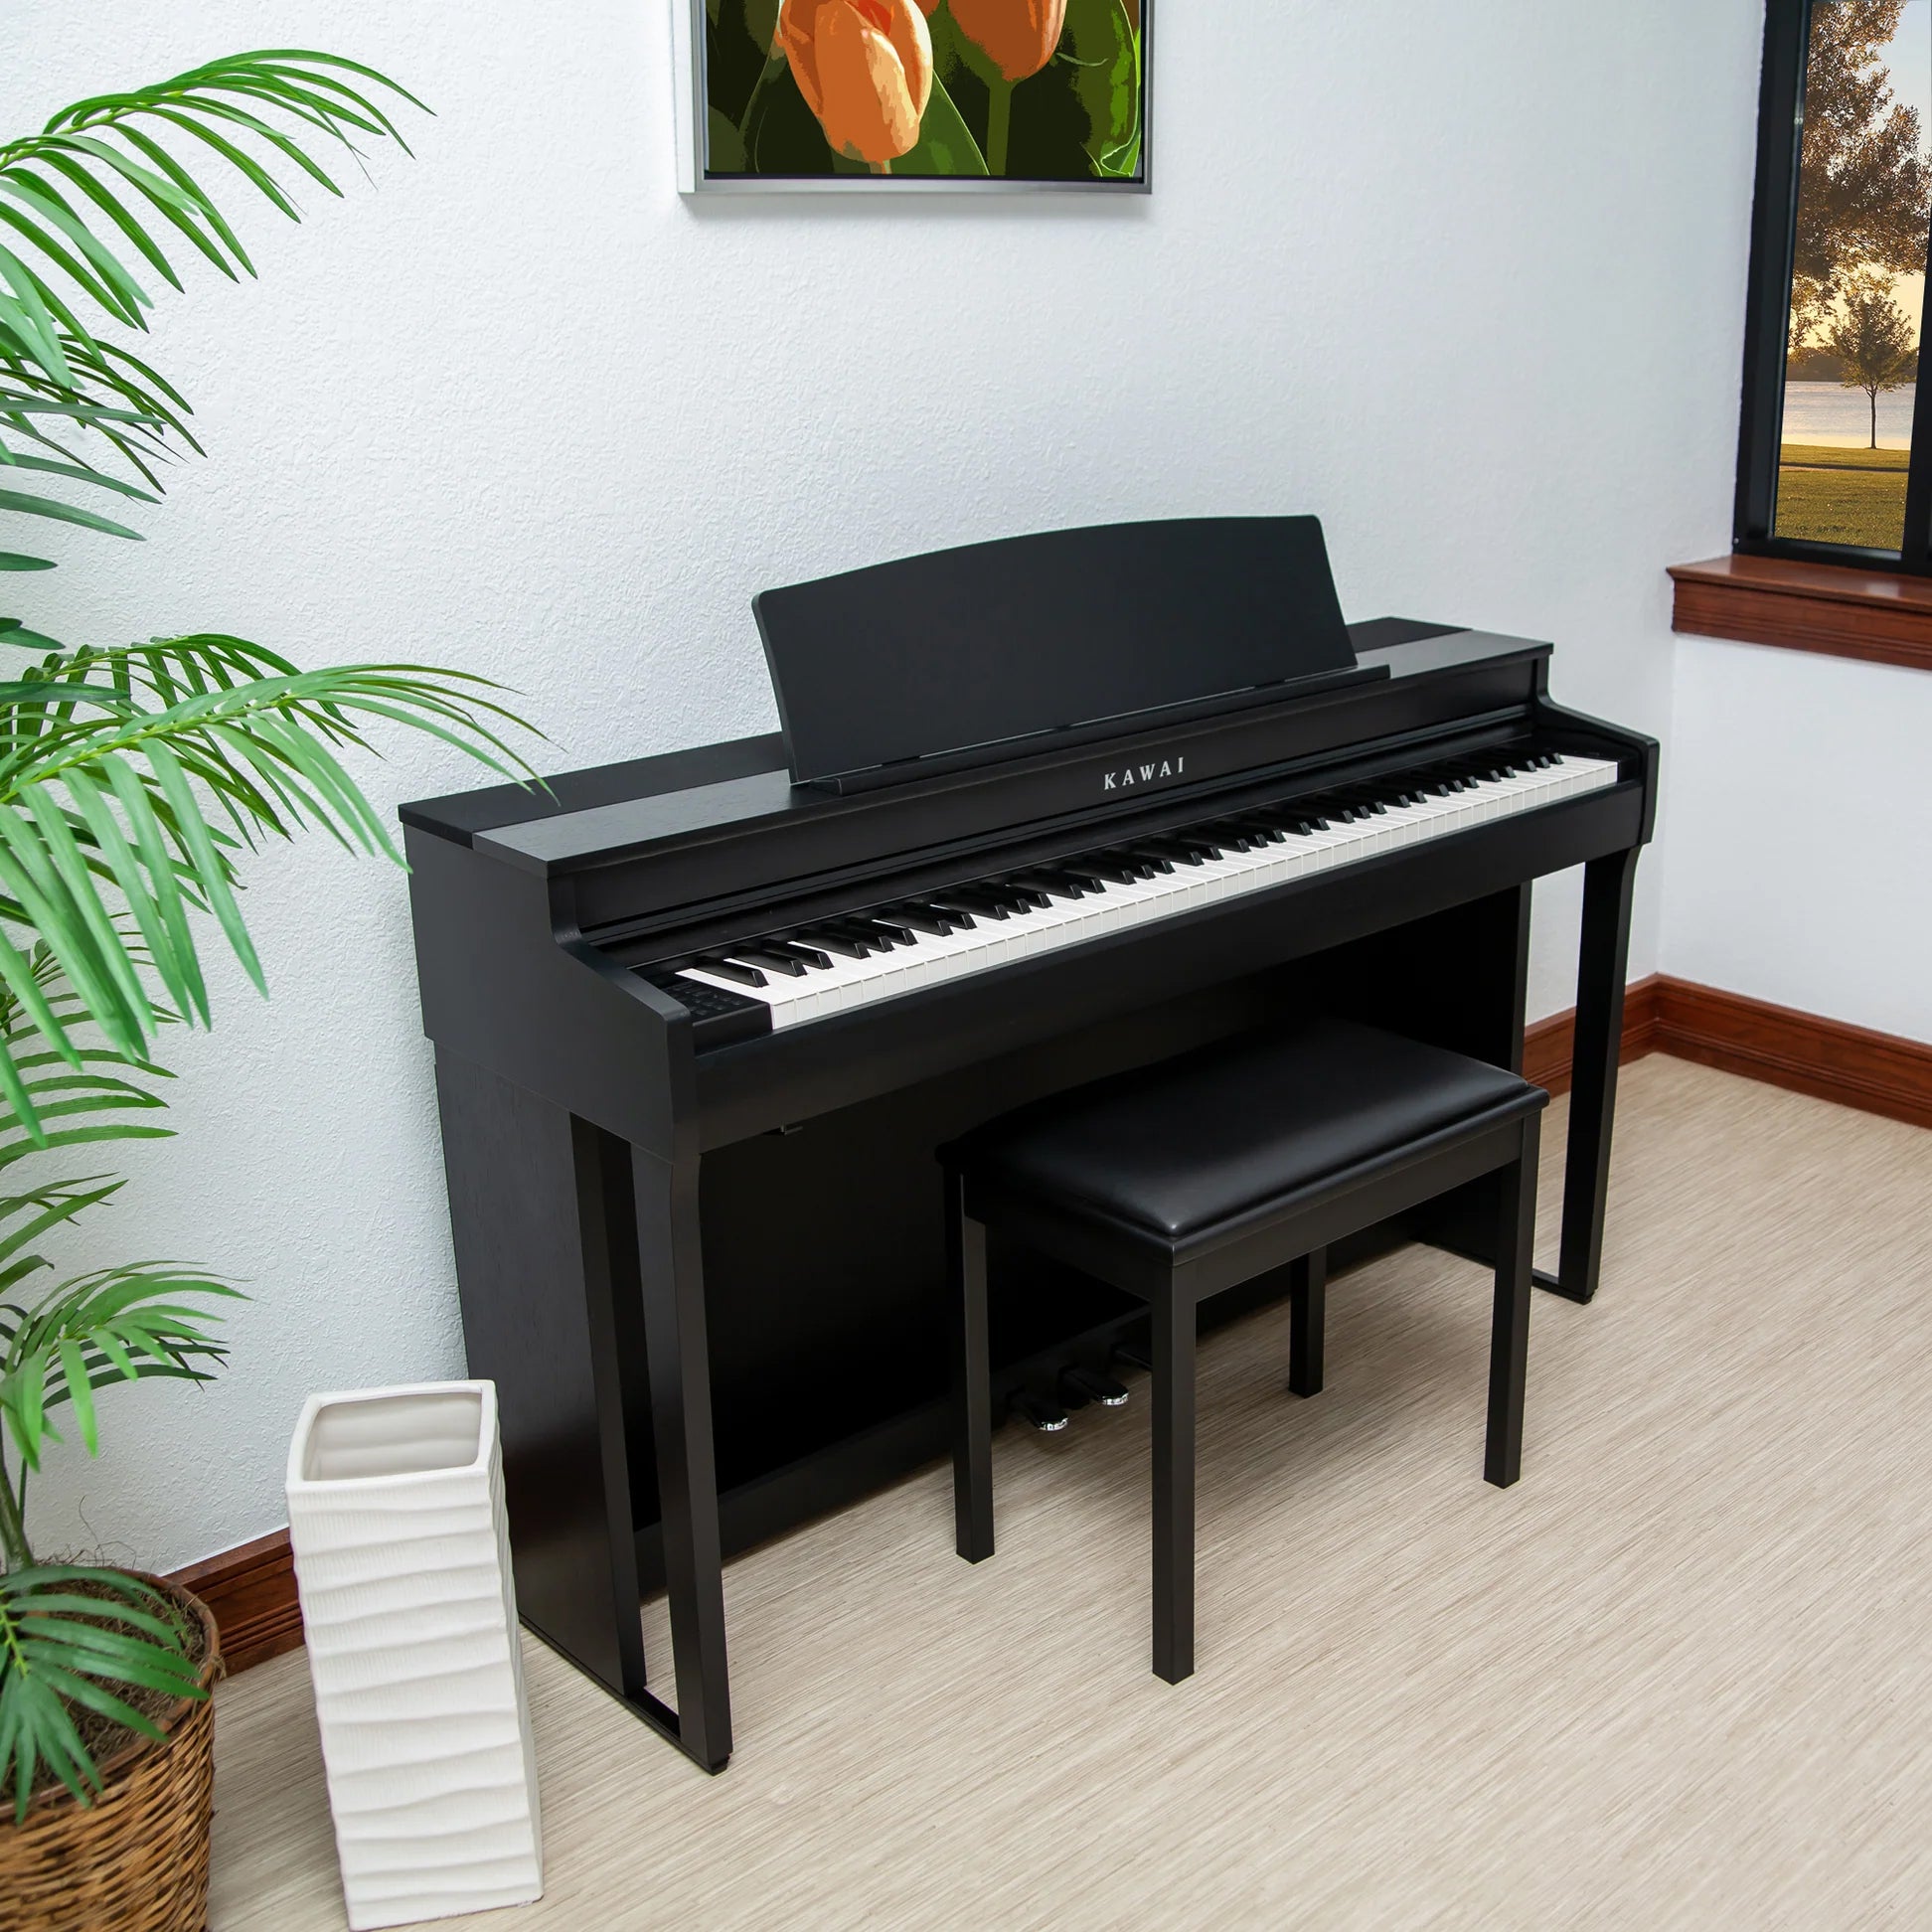 Kawai CN301 Digital Piano - Satin Black - in a stylish living room